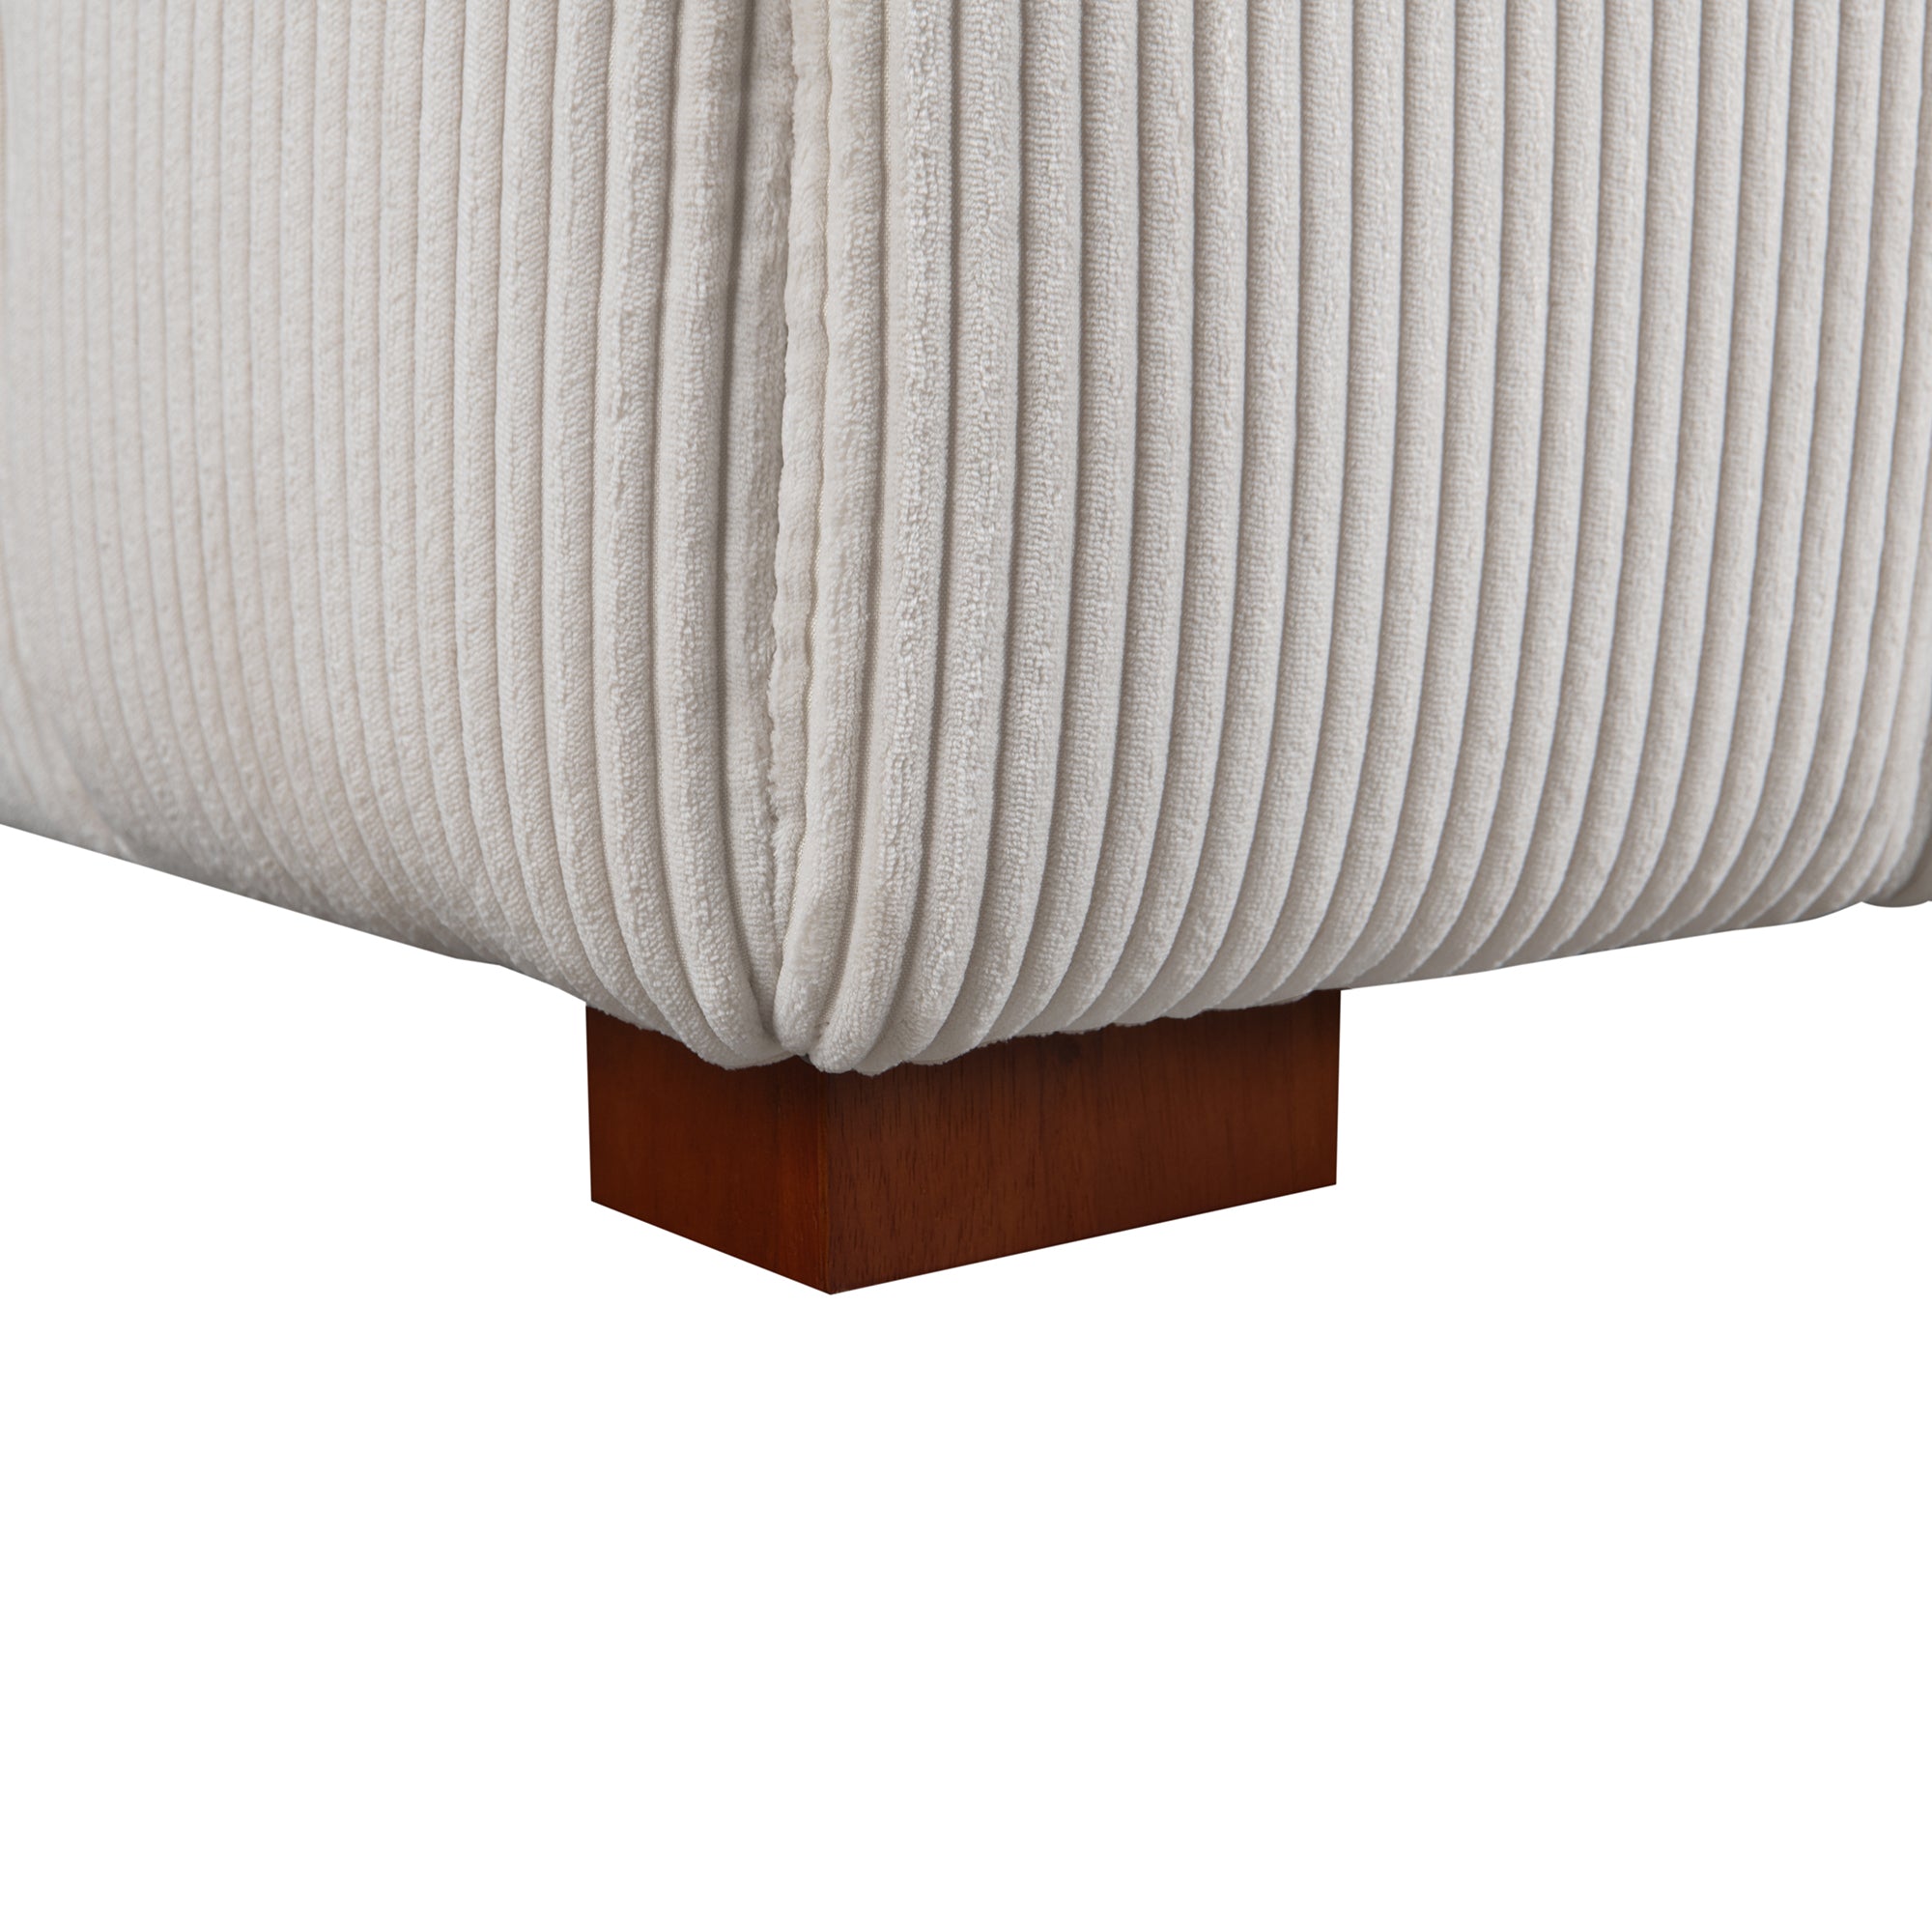 Modern Corduroy Fabric Beige Sofa